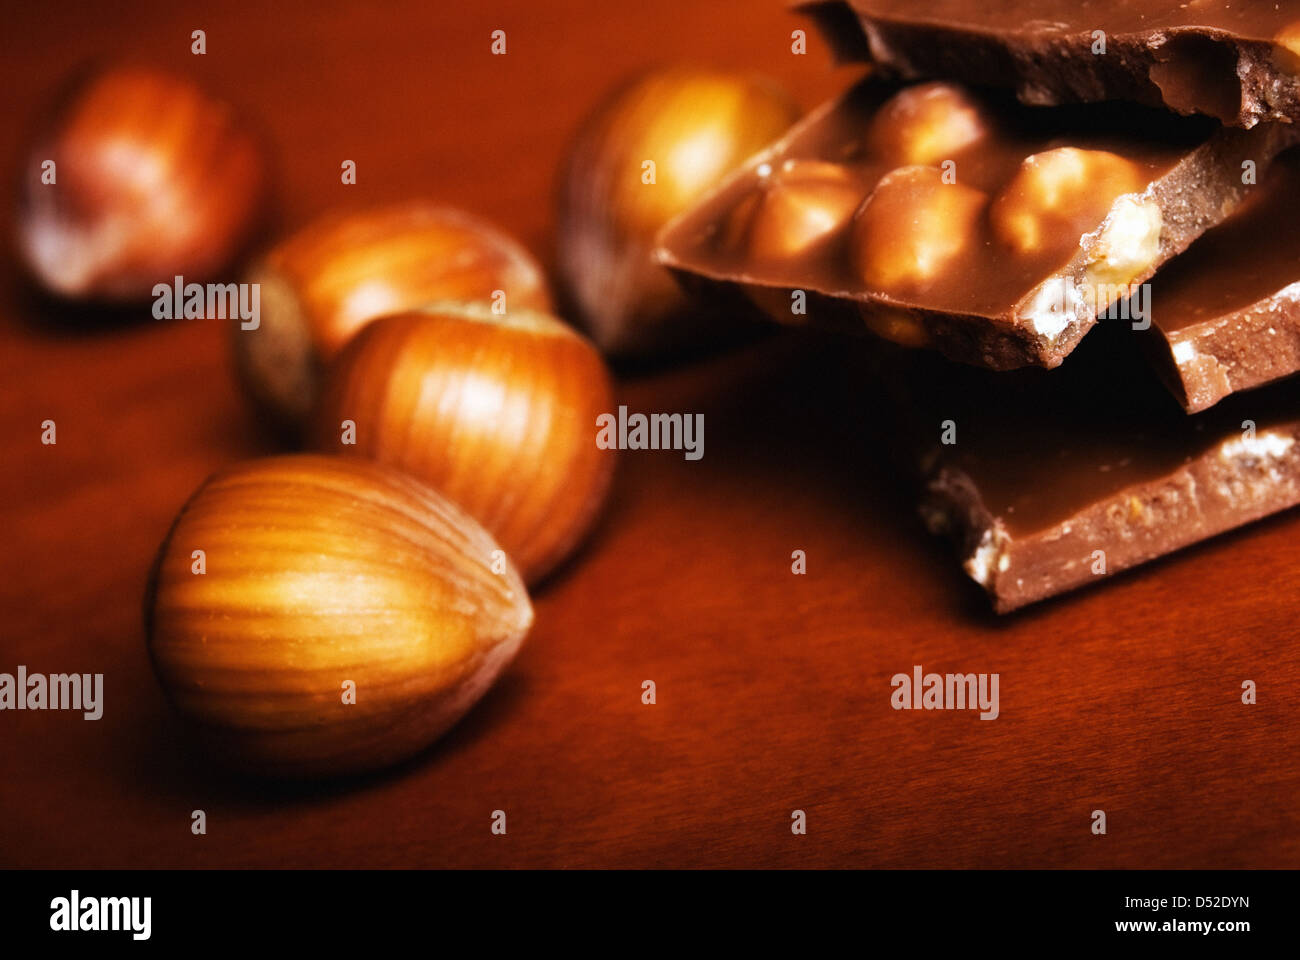 chocolate with hazelnuts Stock Photo